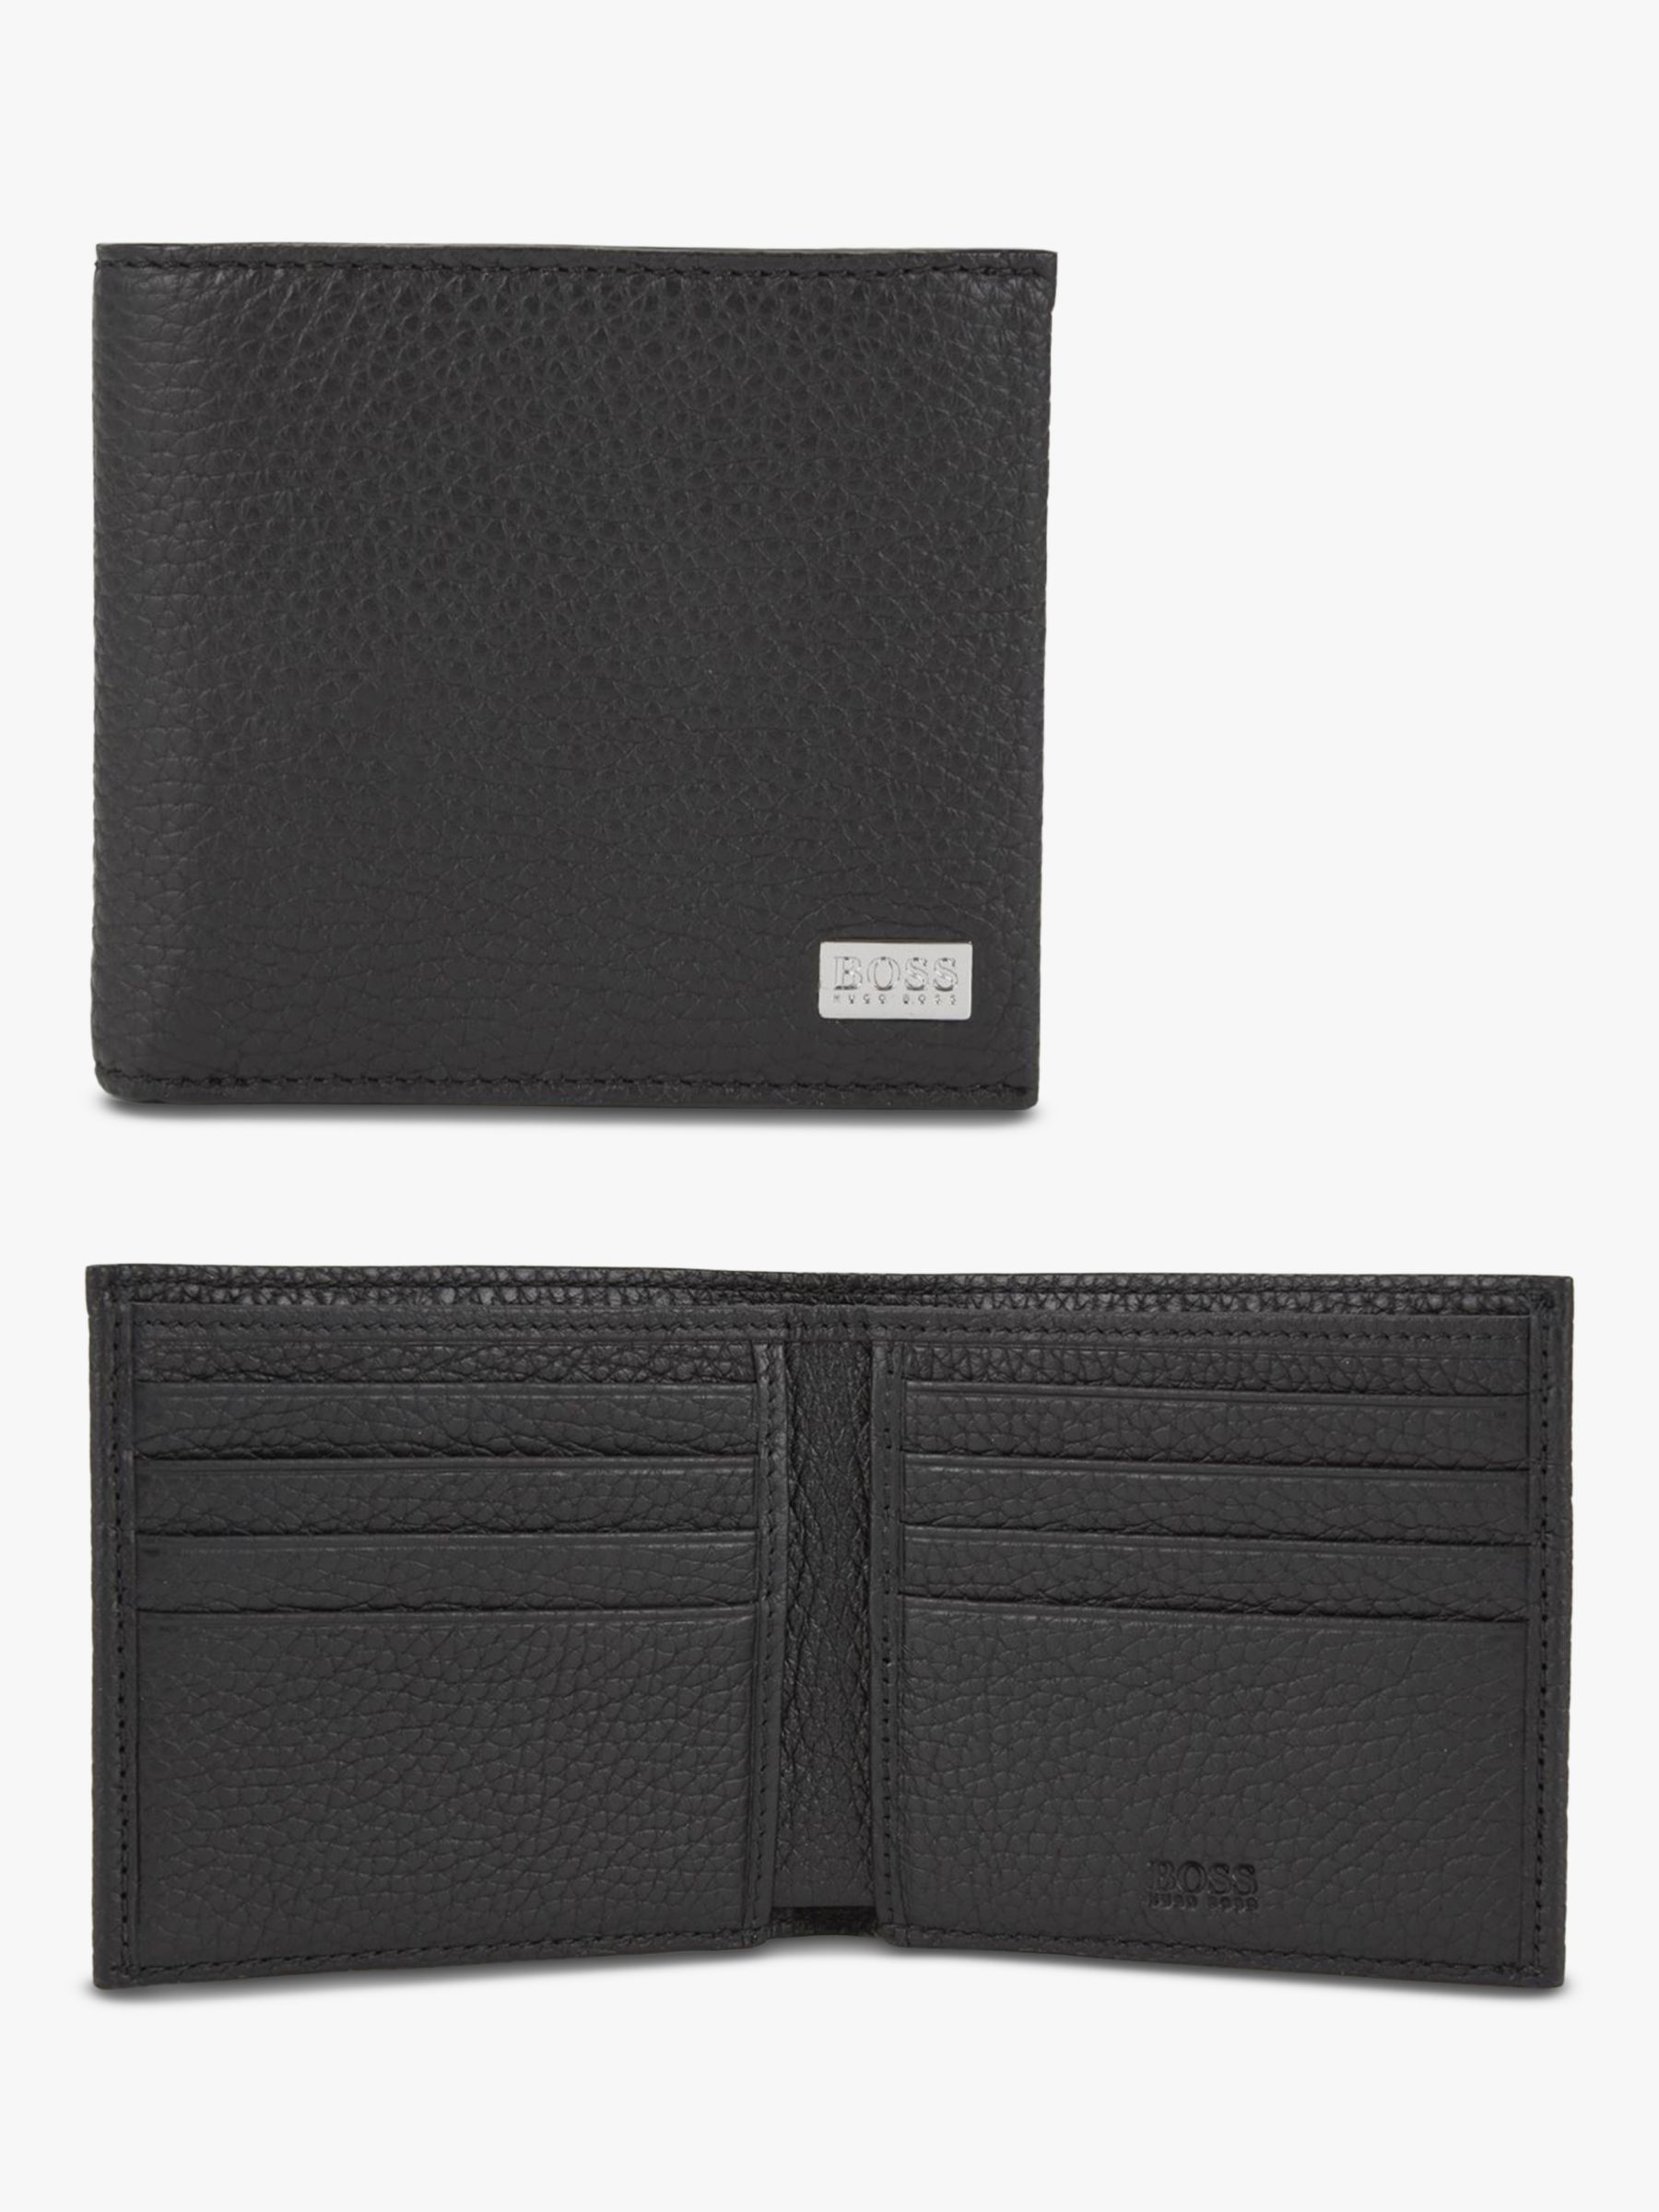 hugo boss men's leather wallet